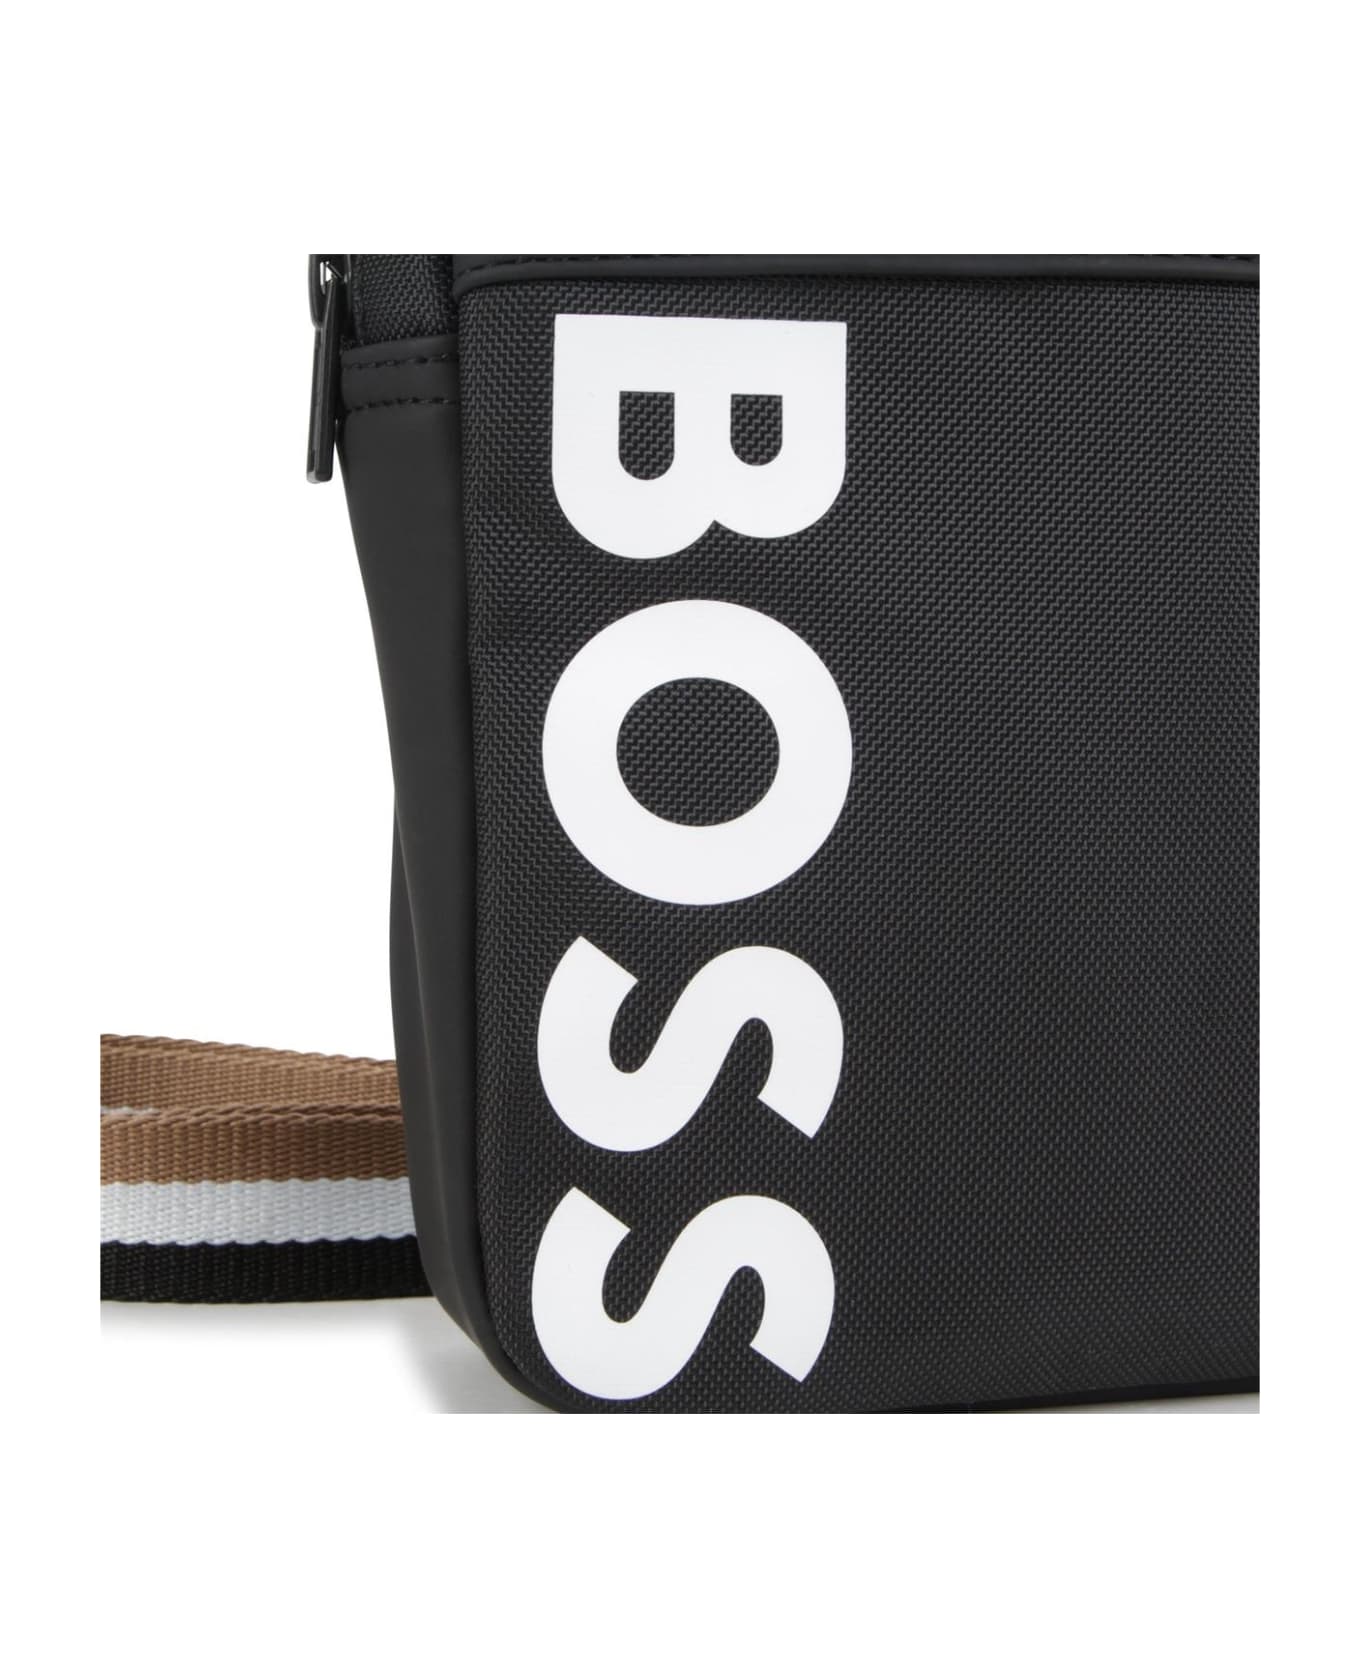 Hugo Boss Messenger Bag With Print - Black